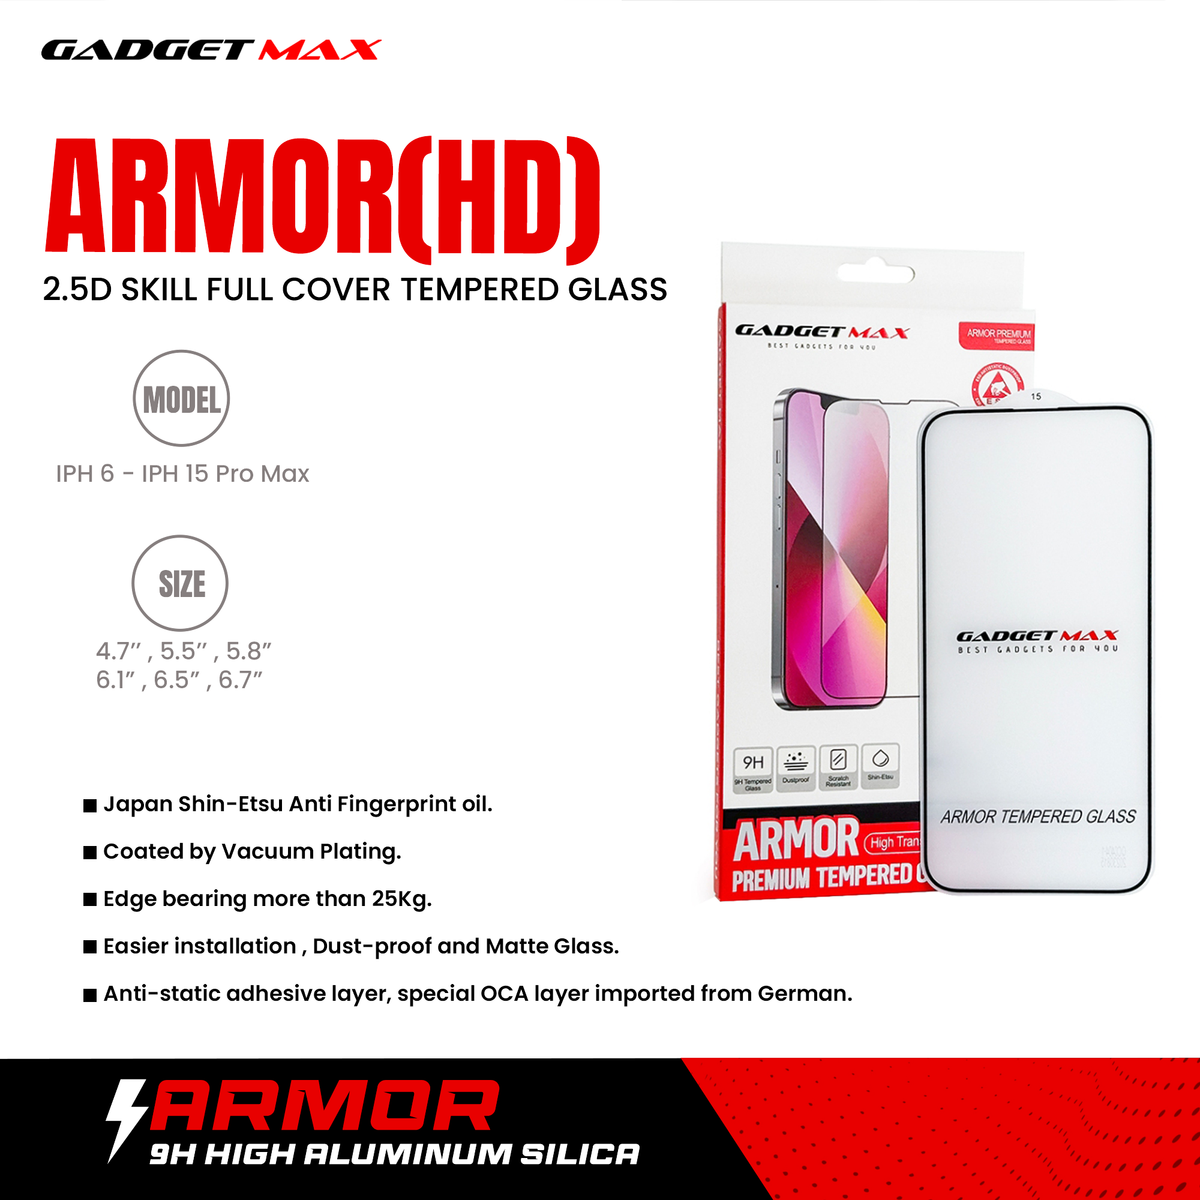 GADGET MAX Armor iPhone 6 Plus 5.5" 2.5D Anti-Static Tempered Glass